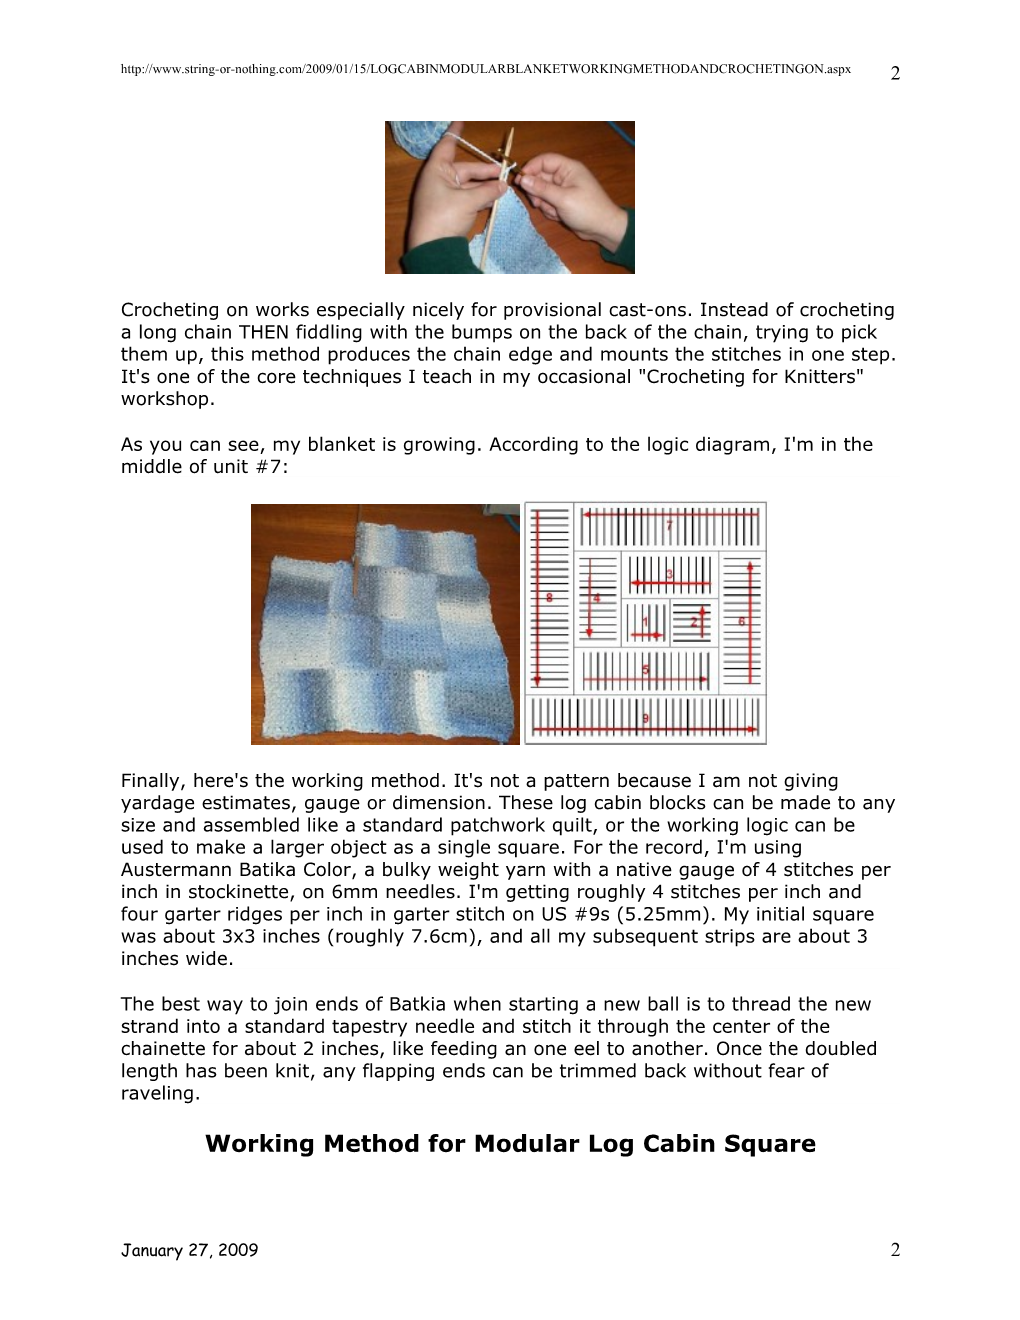 Log Cabin Modular Blanket Working Method and Crocheting On